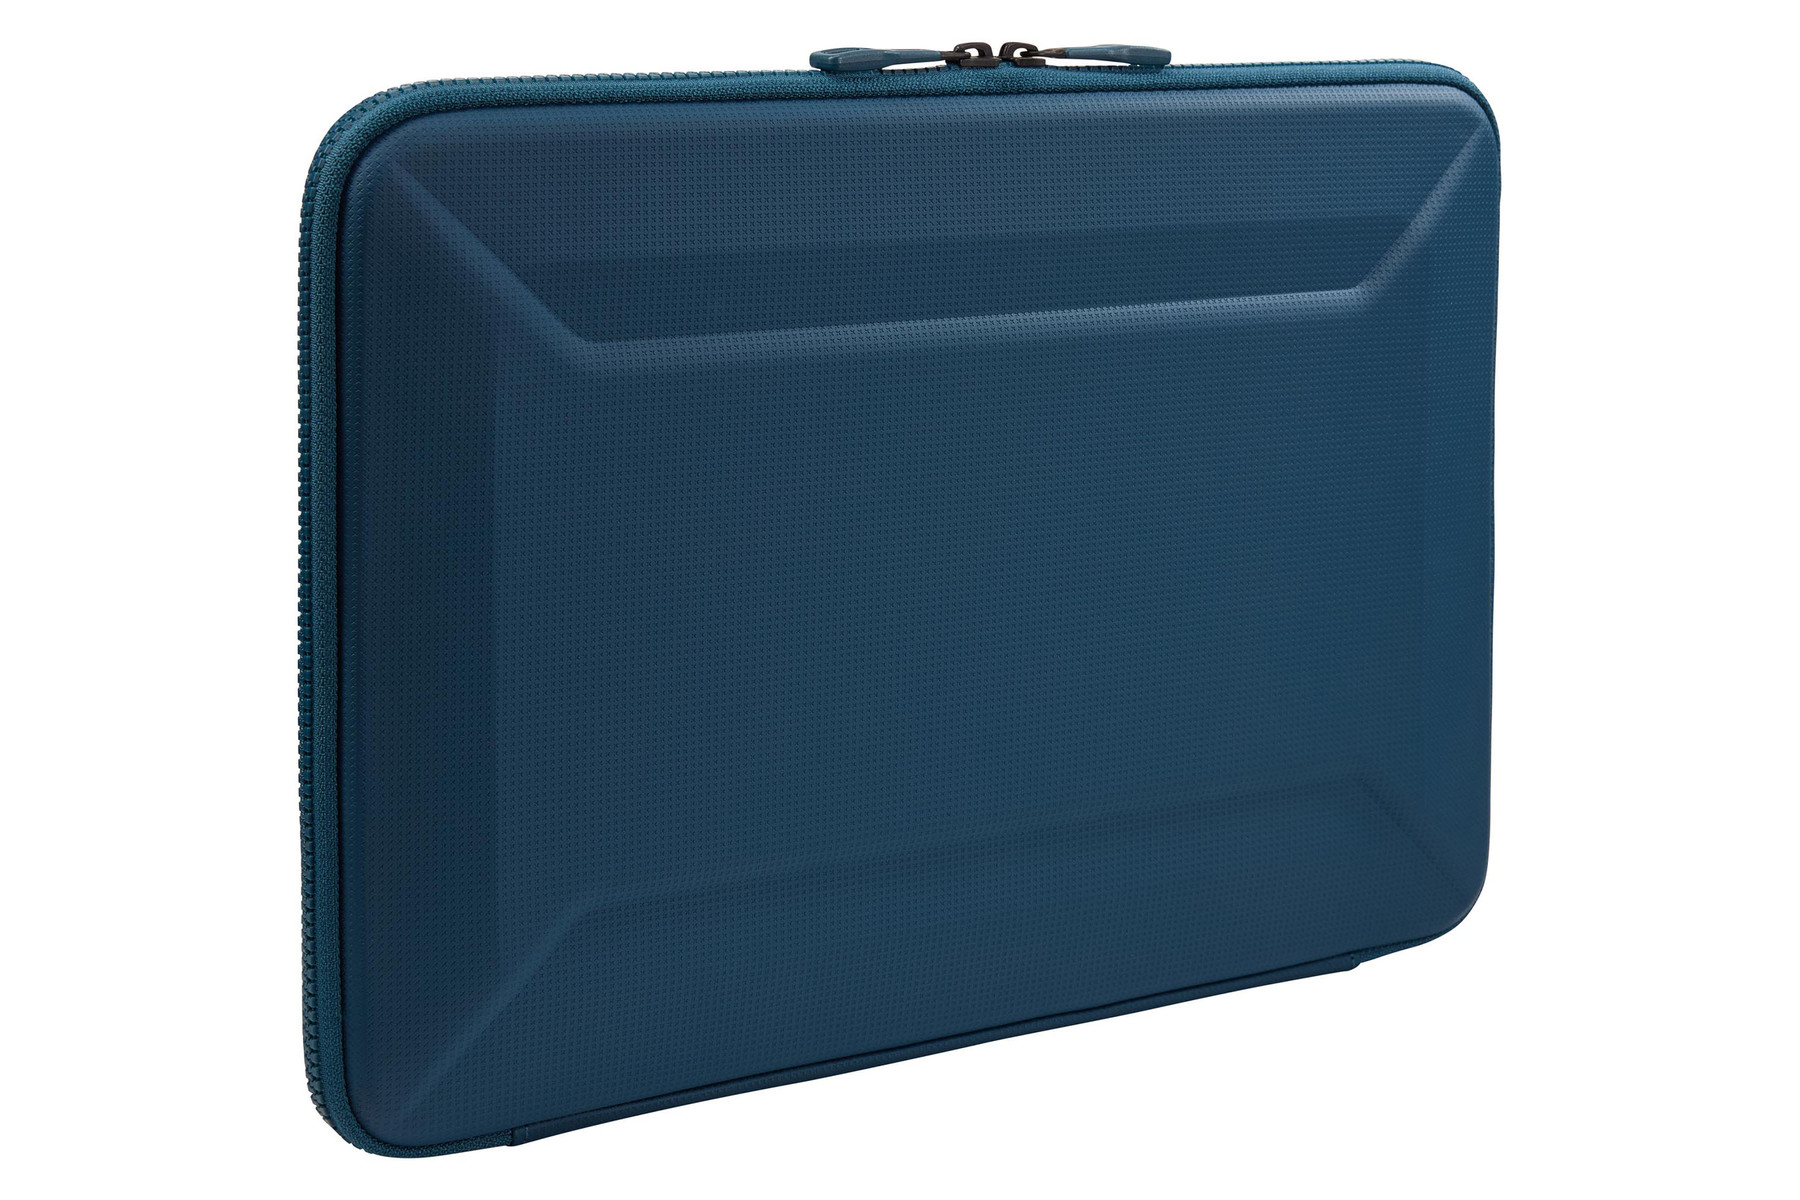 Чехол Thule 16-inch для MacBook Pro Gauntlet Sleeve Blue TGSE2357BLU / 3204524 аксессуар чехол 16 inch thule для apple macbook pro gauntlet sleeve black tgse2357blk 3204523